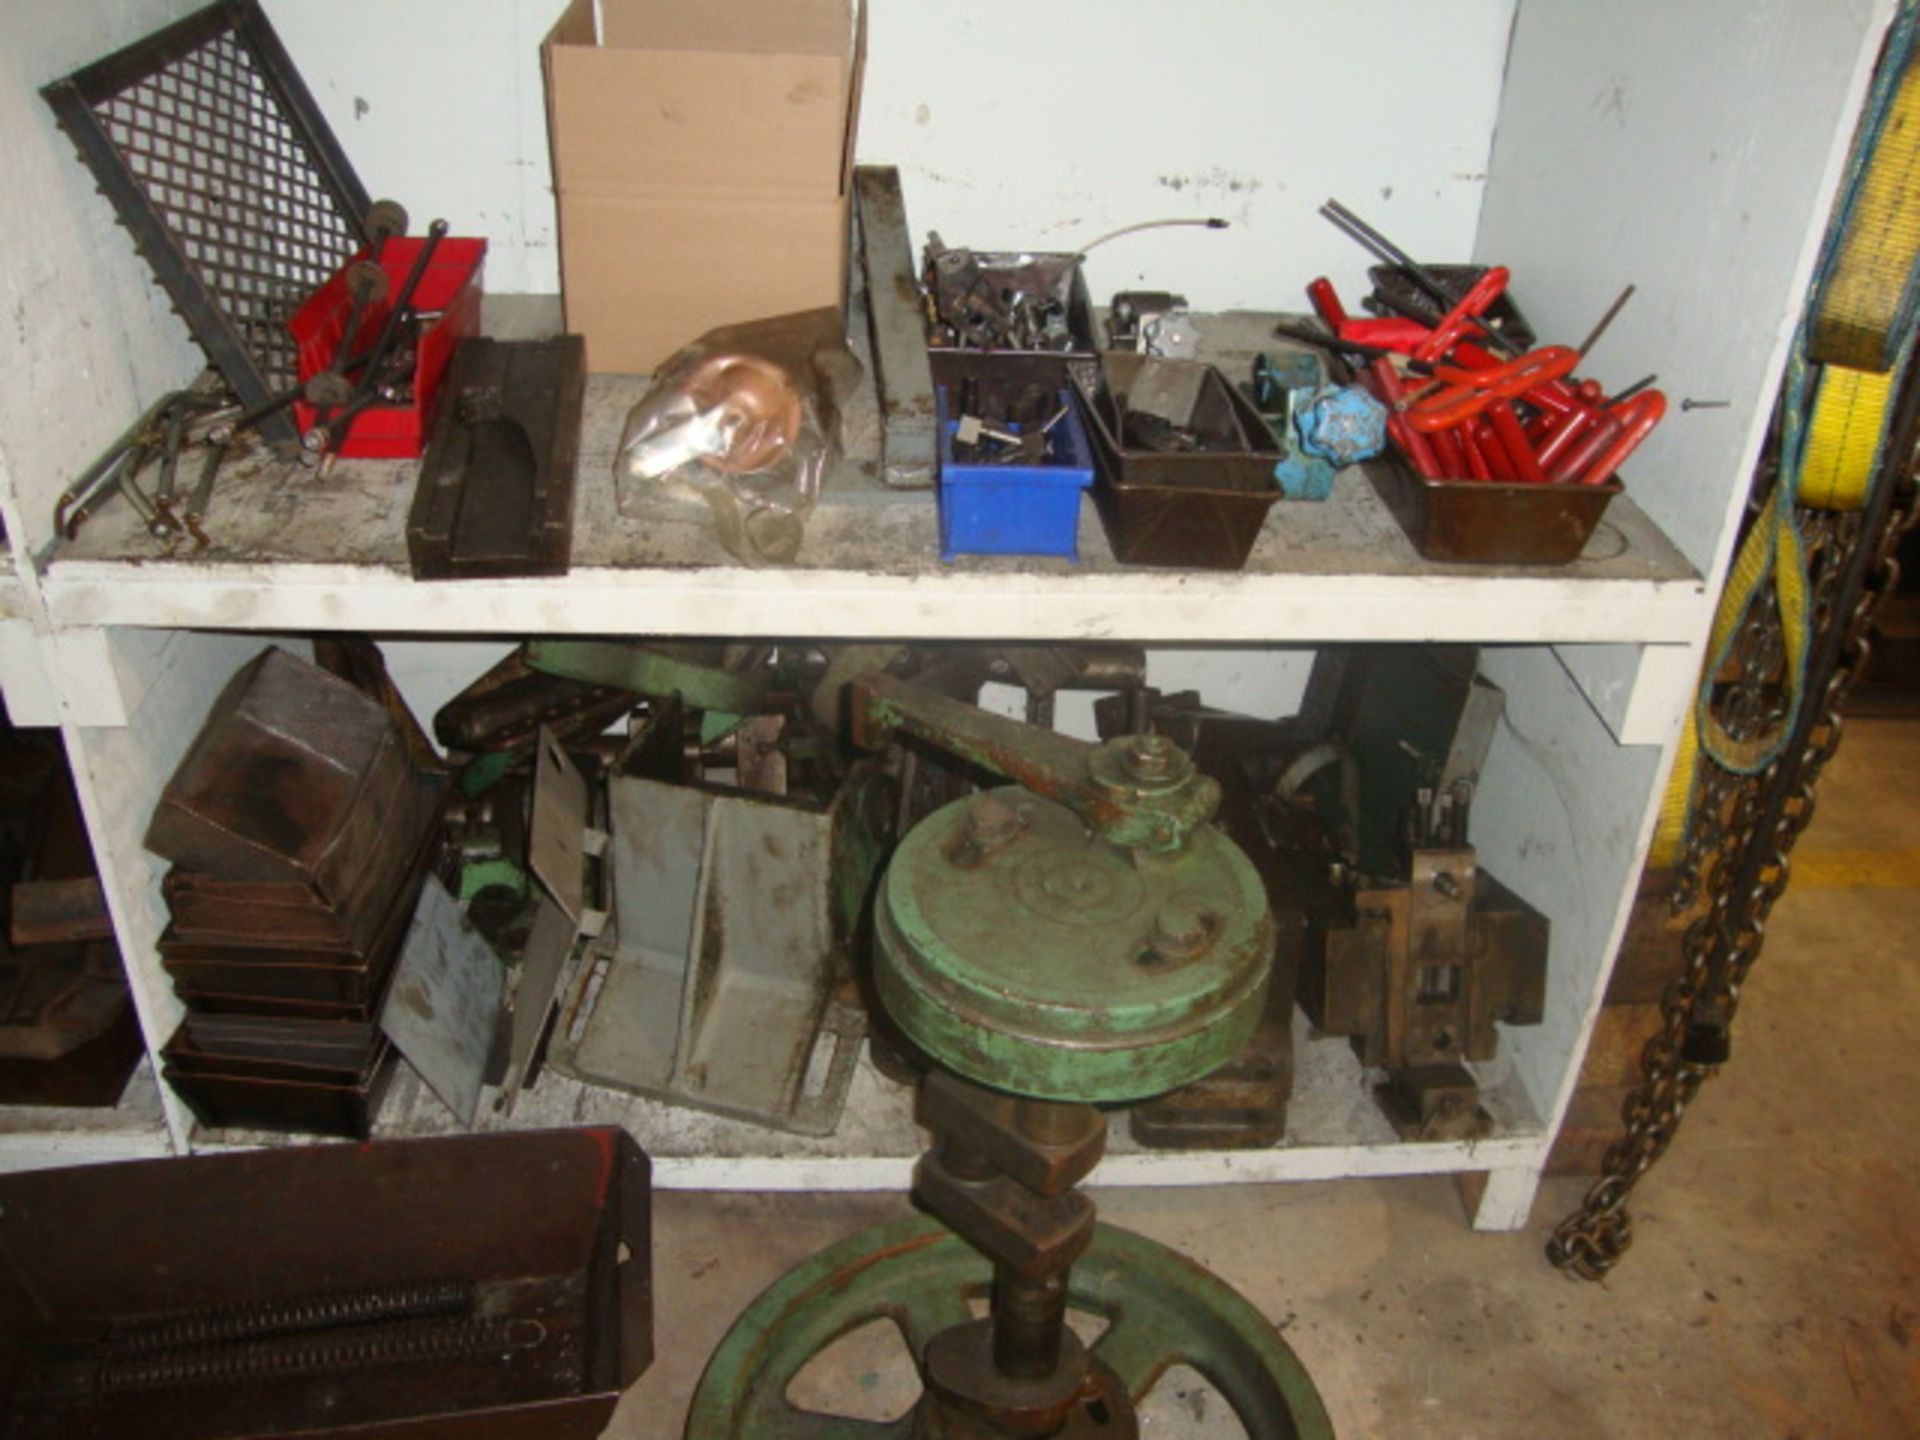 LOT CONSISTING OF WATERBURY FARREL REPAIR PARTS: gears, levers, blocks, slides, oilers, strippers, - Image 3 of 6